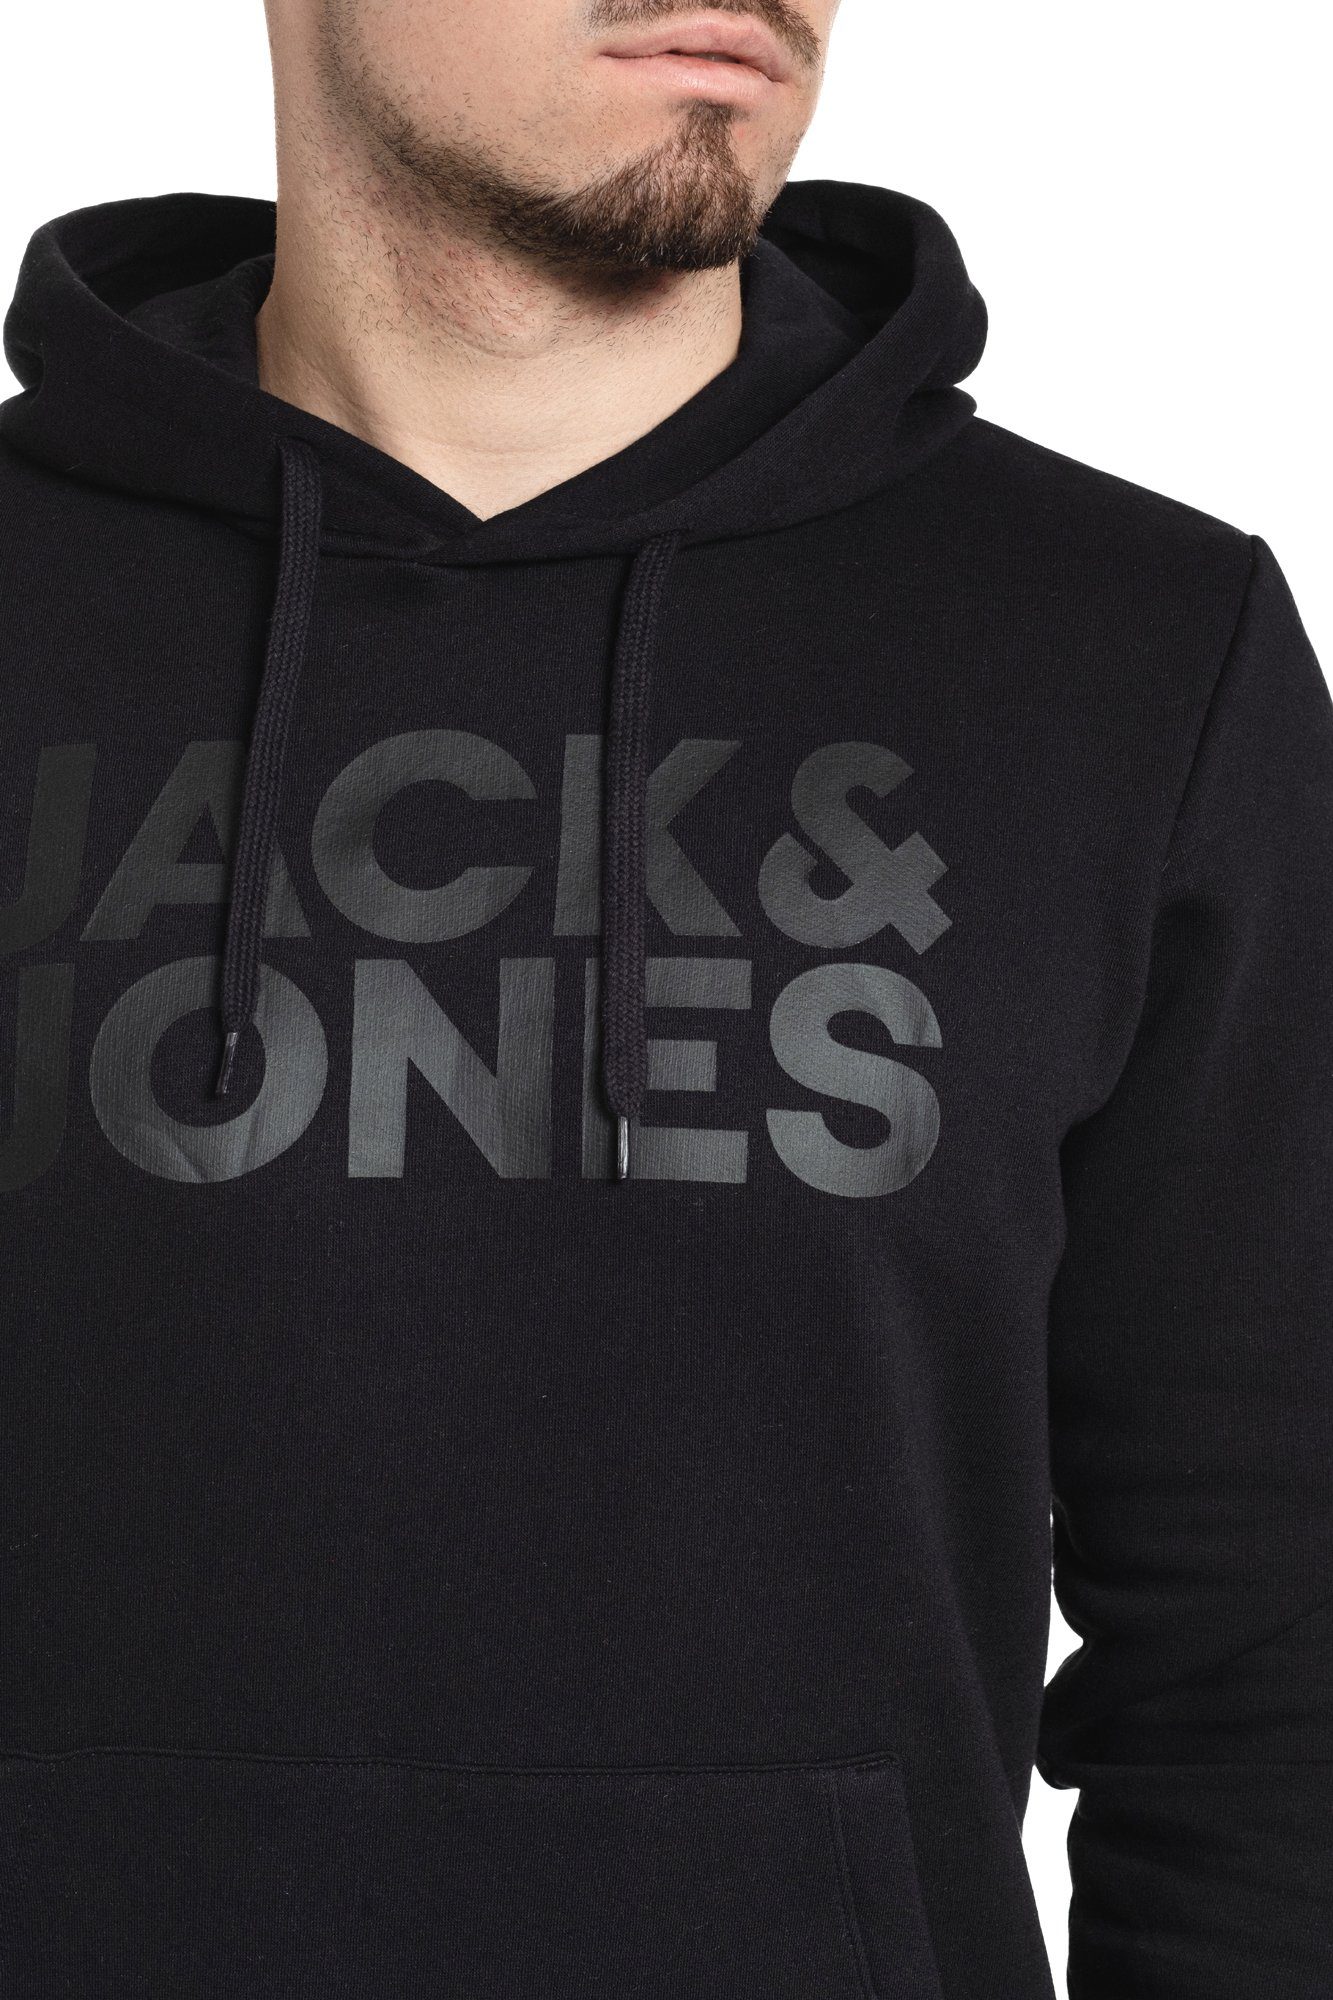 Jones mit Kängurutasche & Kapuzensweatshirt Black-Black Jack